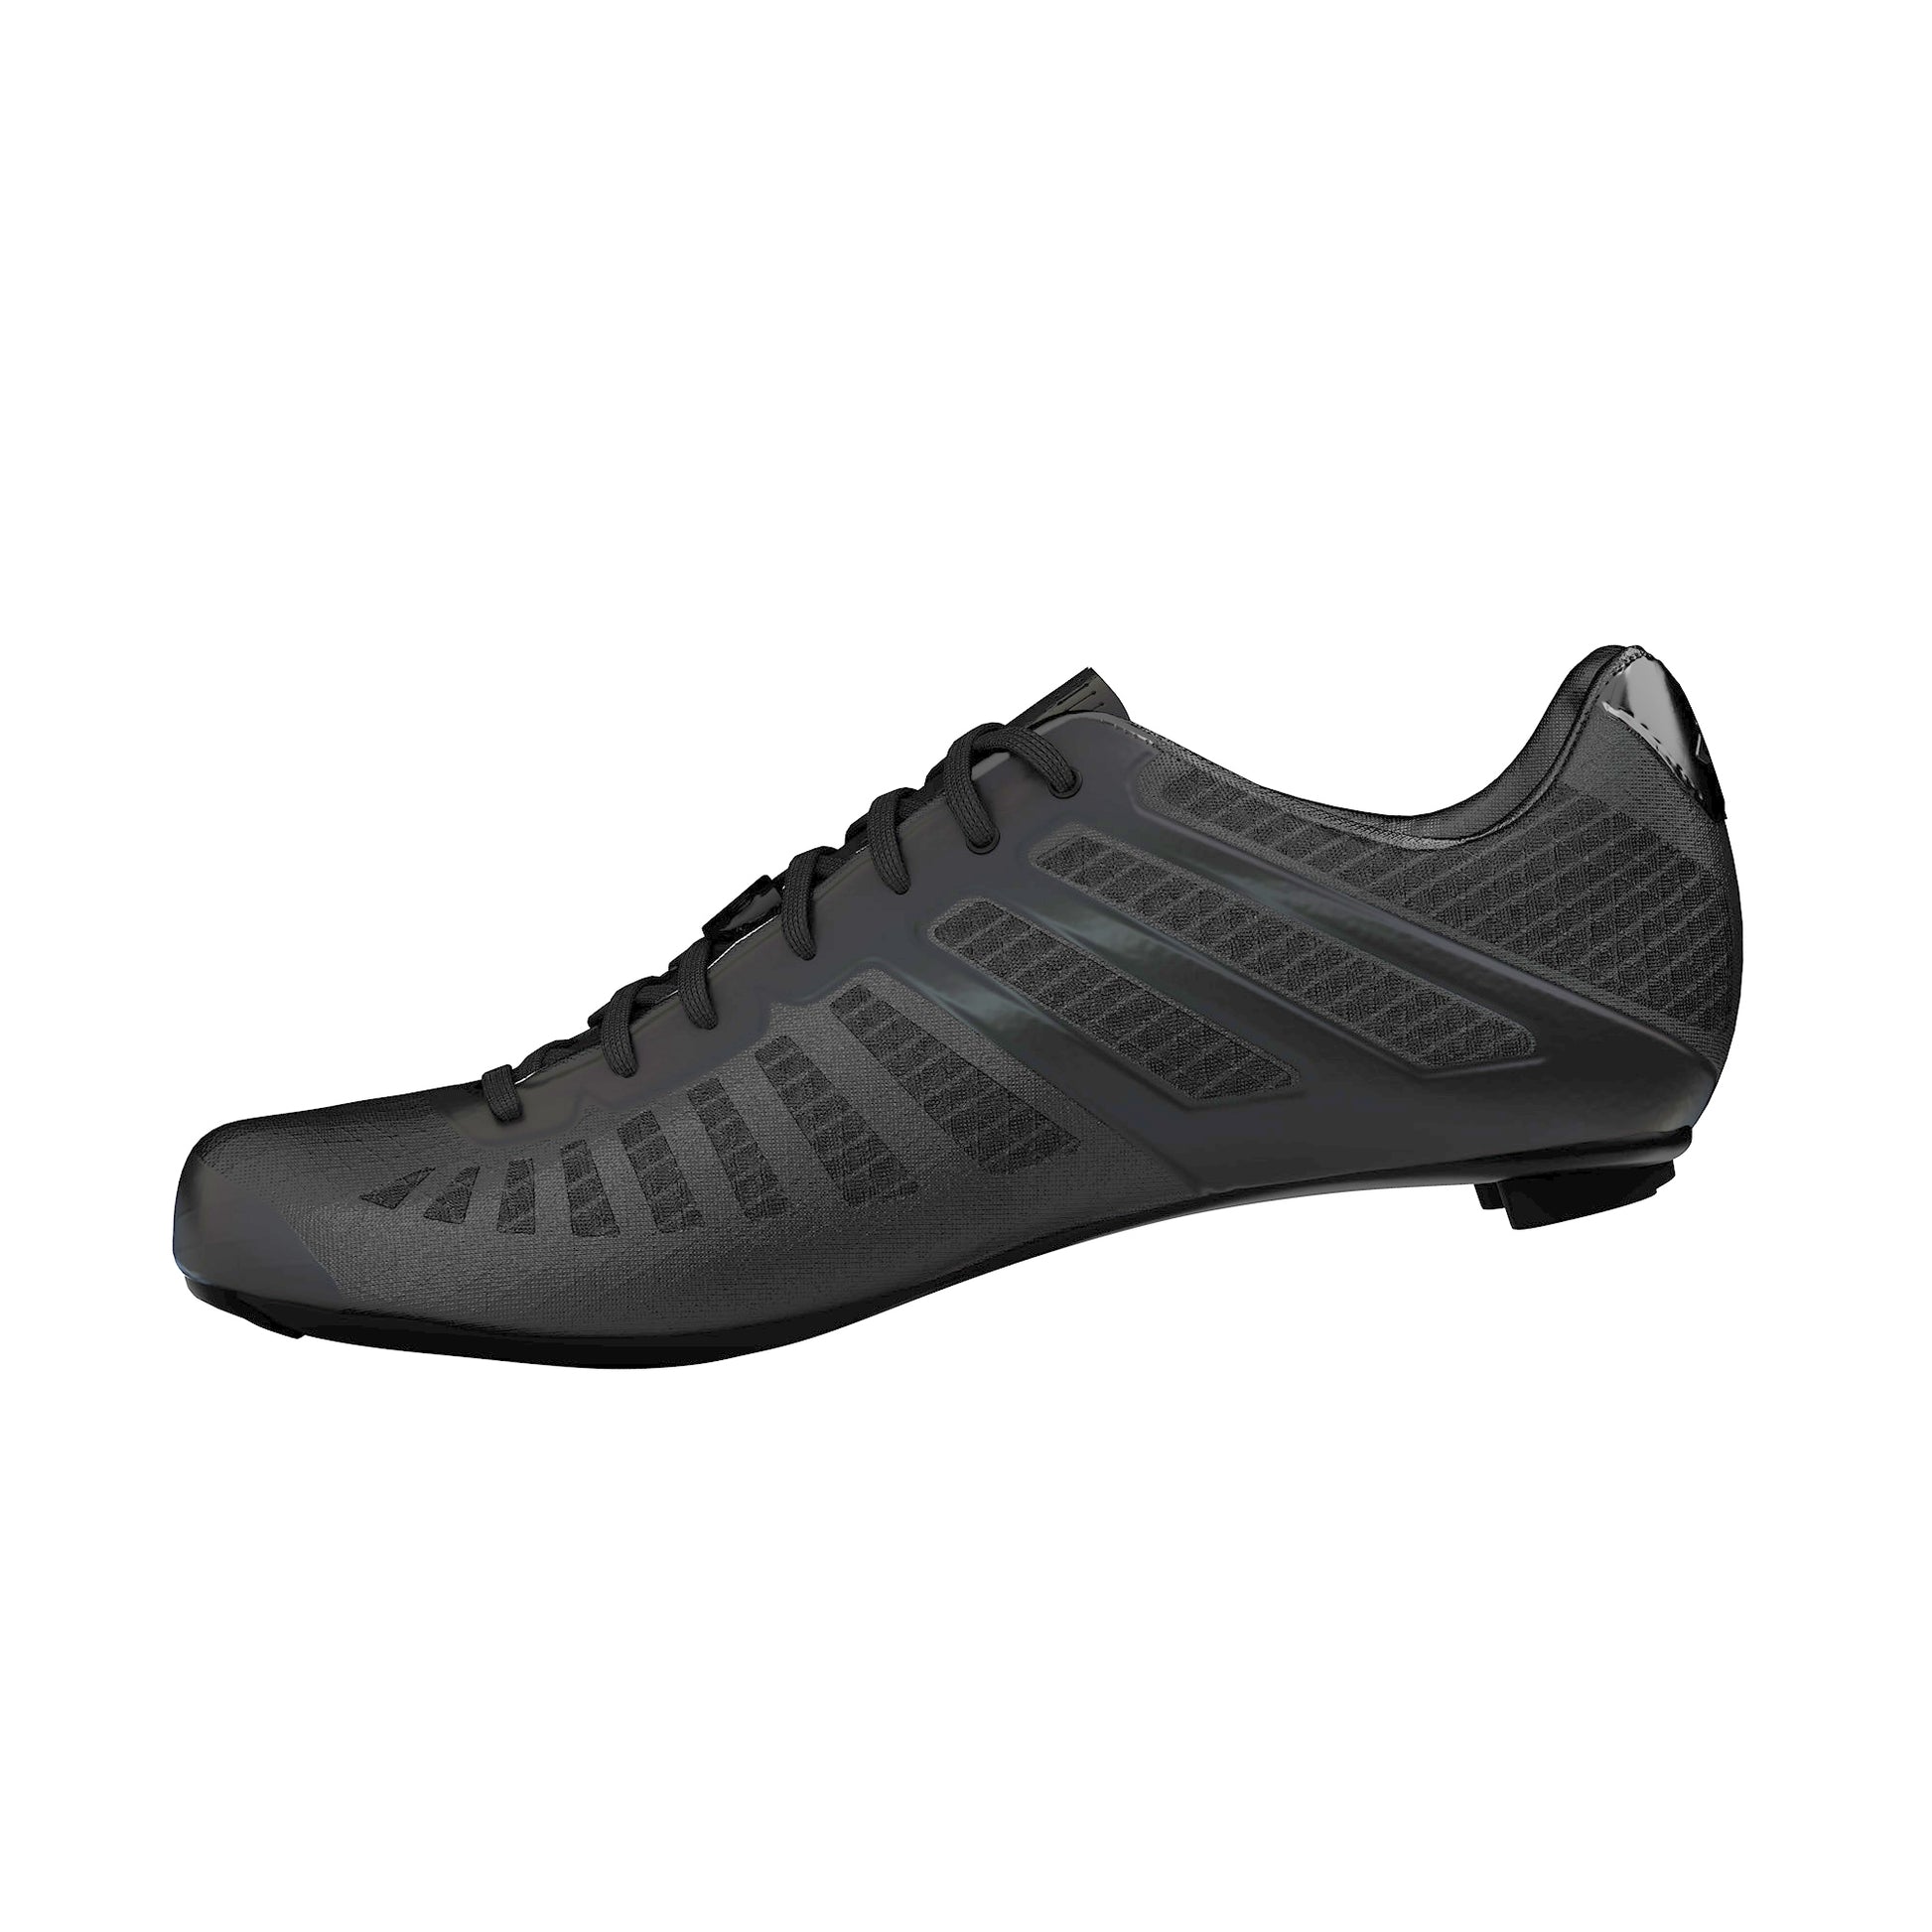 Giro Empire SLX Shoe Carbon Black Bike Shoes